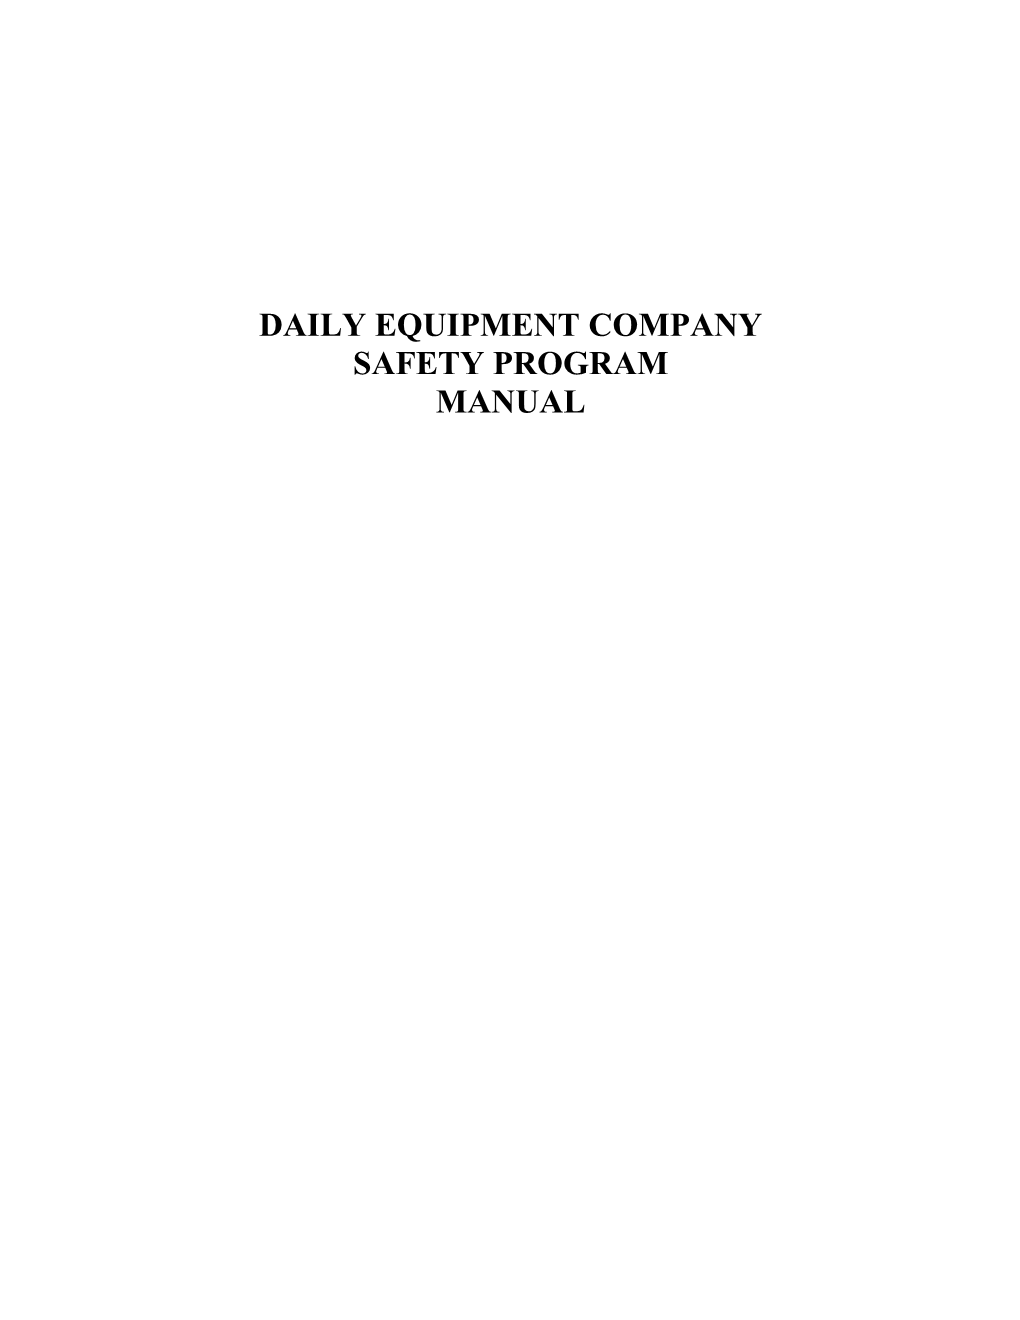 Daily Equipment Company